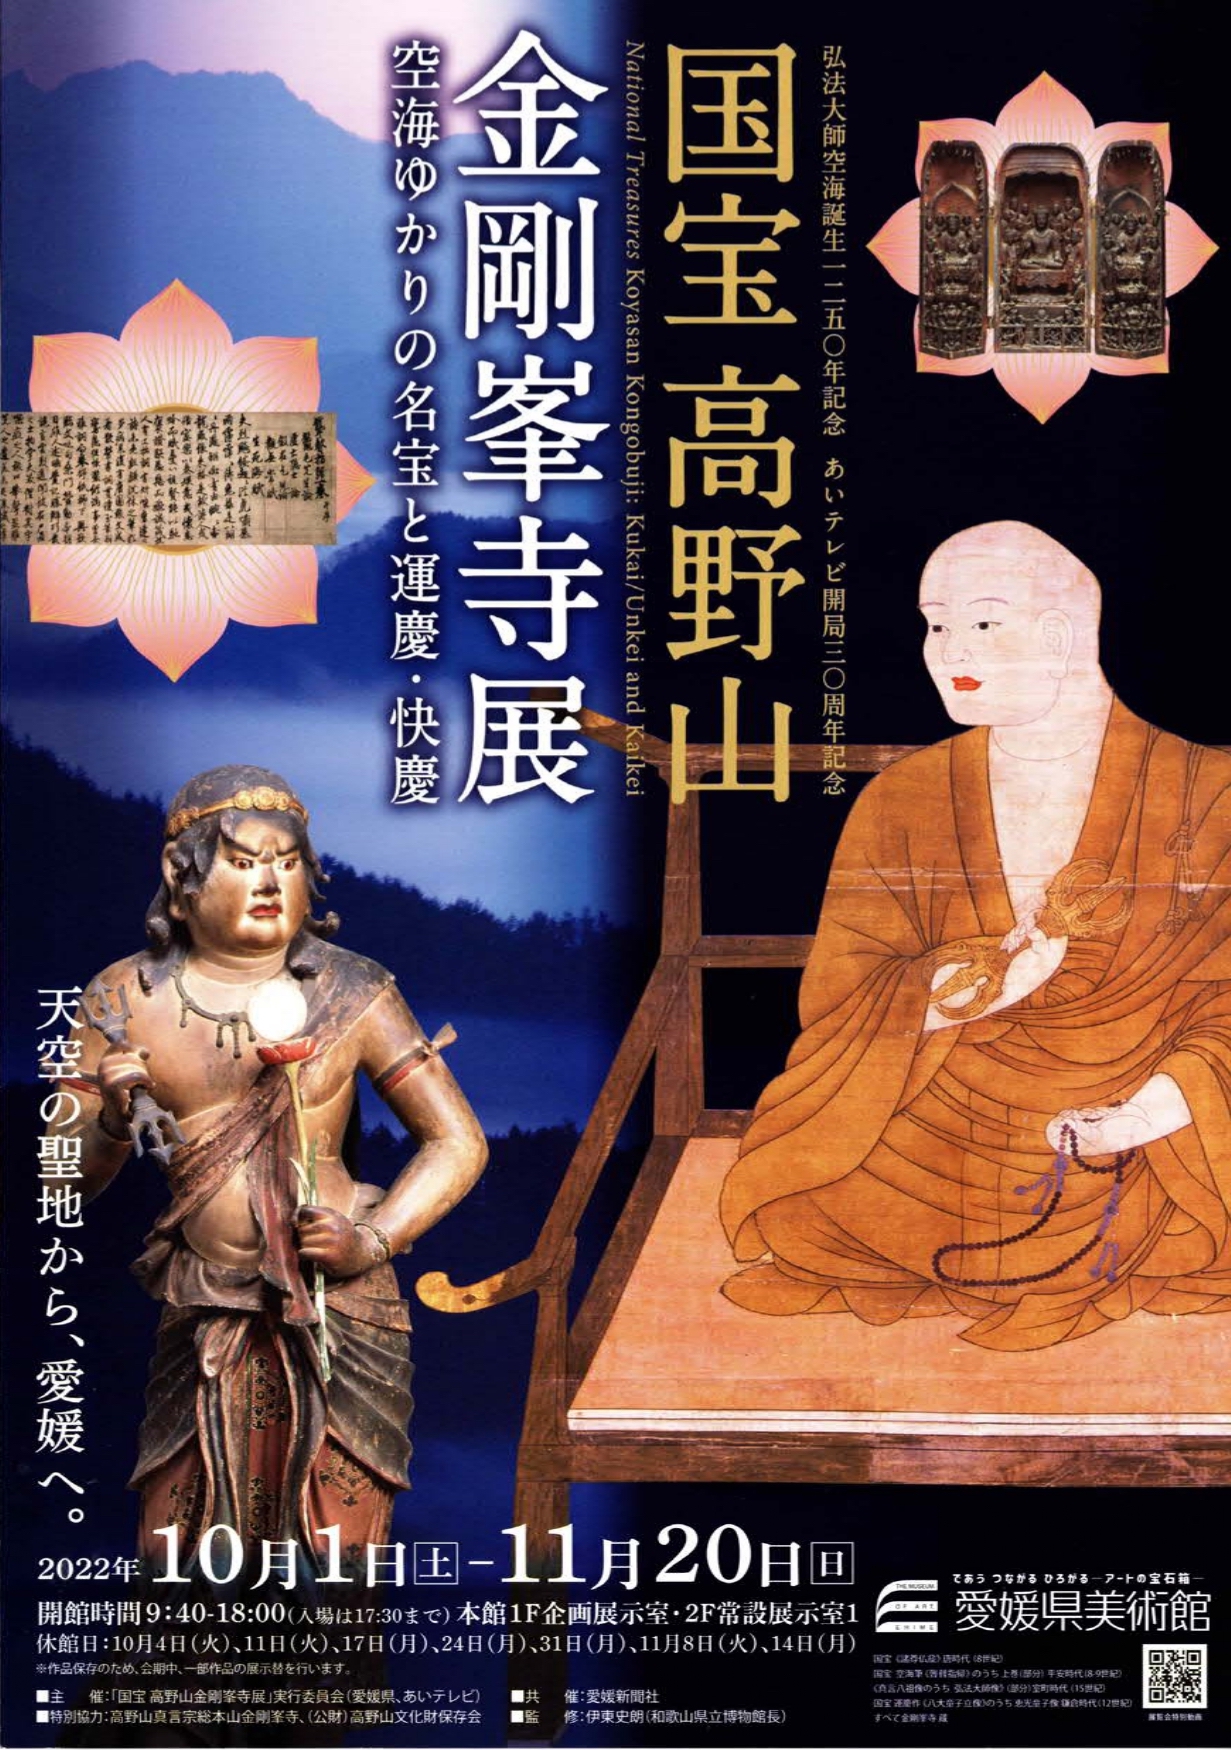 Exhibition of National Treasure Koyasan Kongobuji Temple in